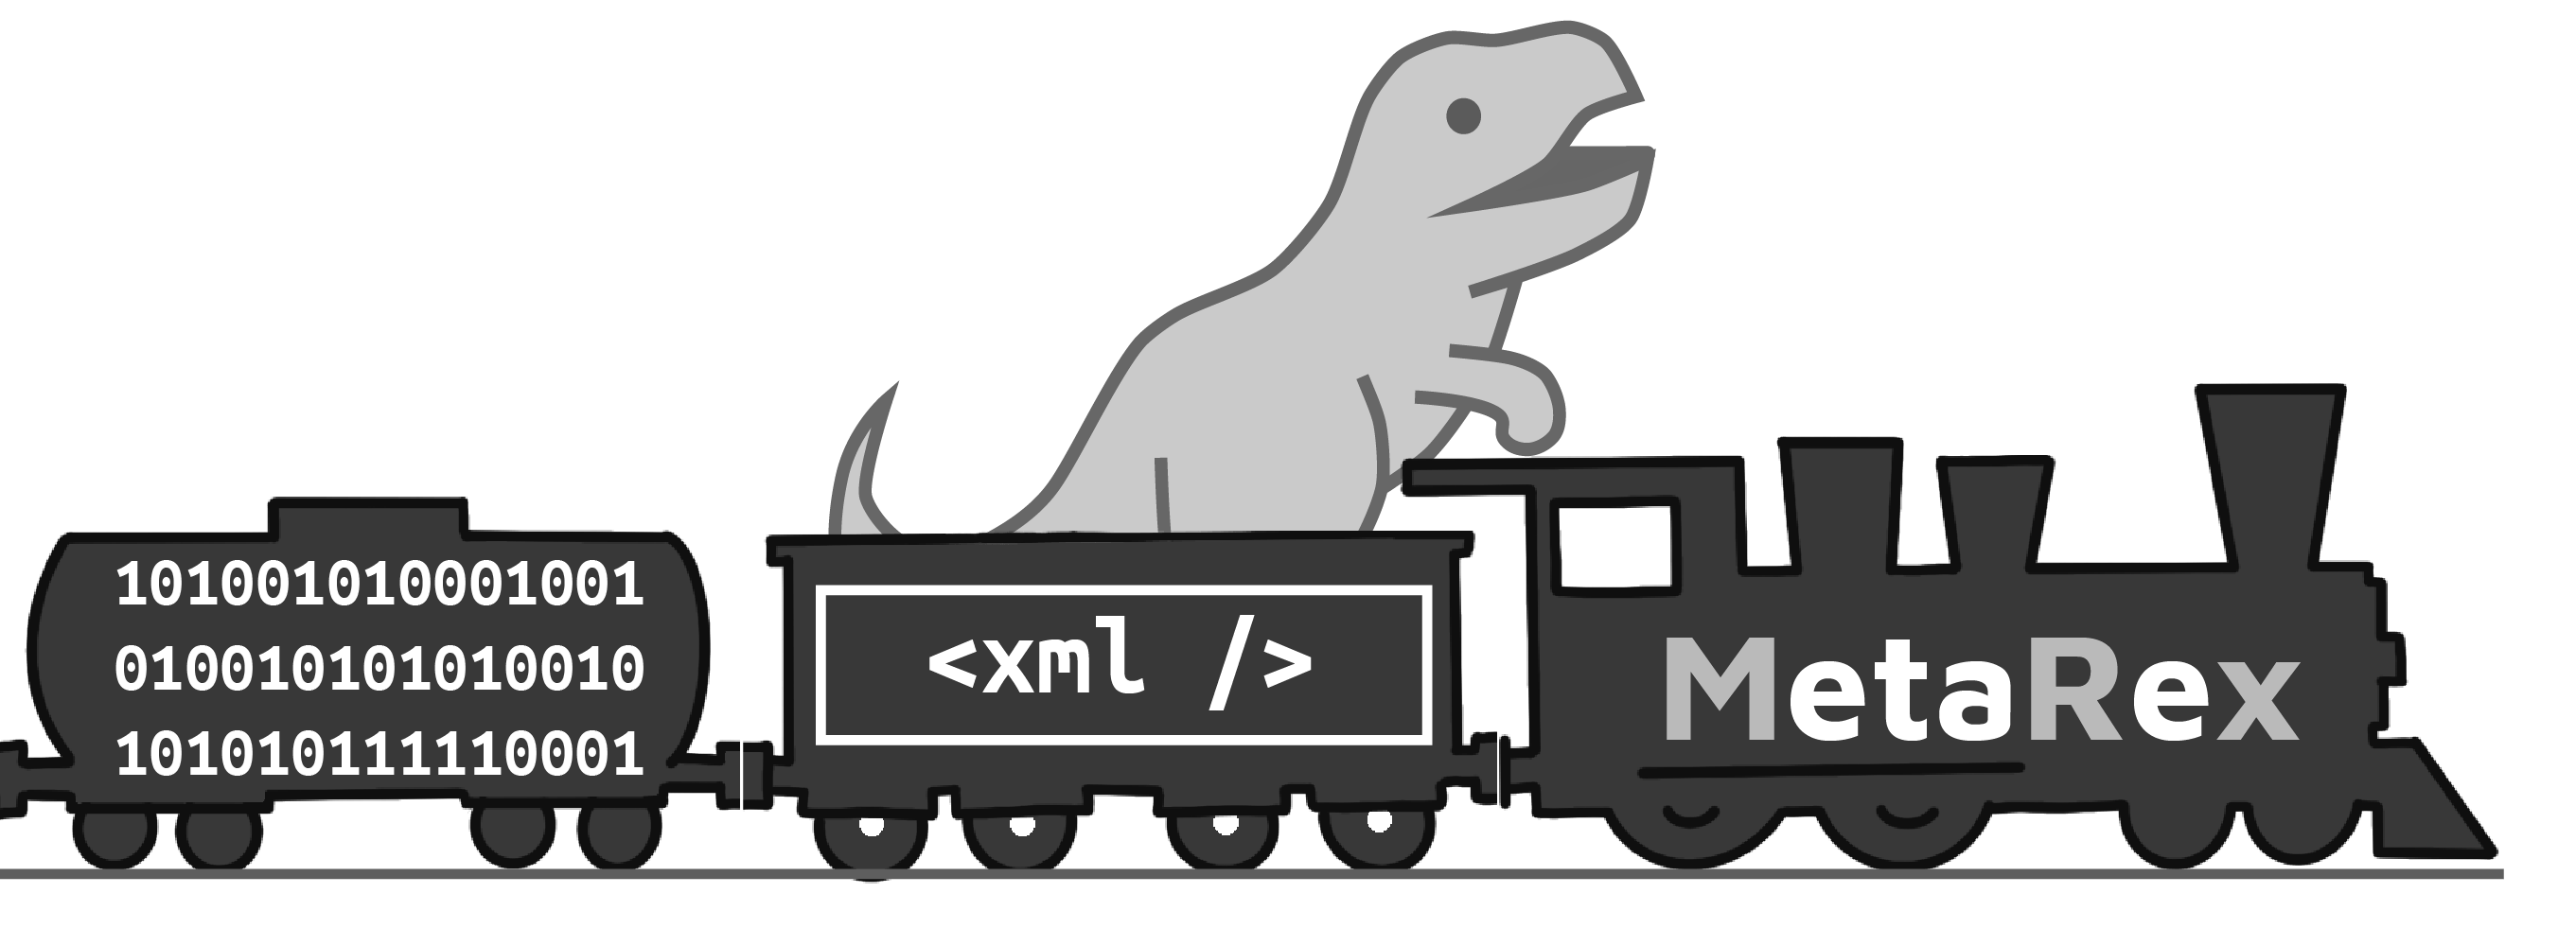 mrx-train-short-1000gscale